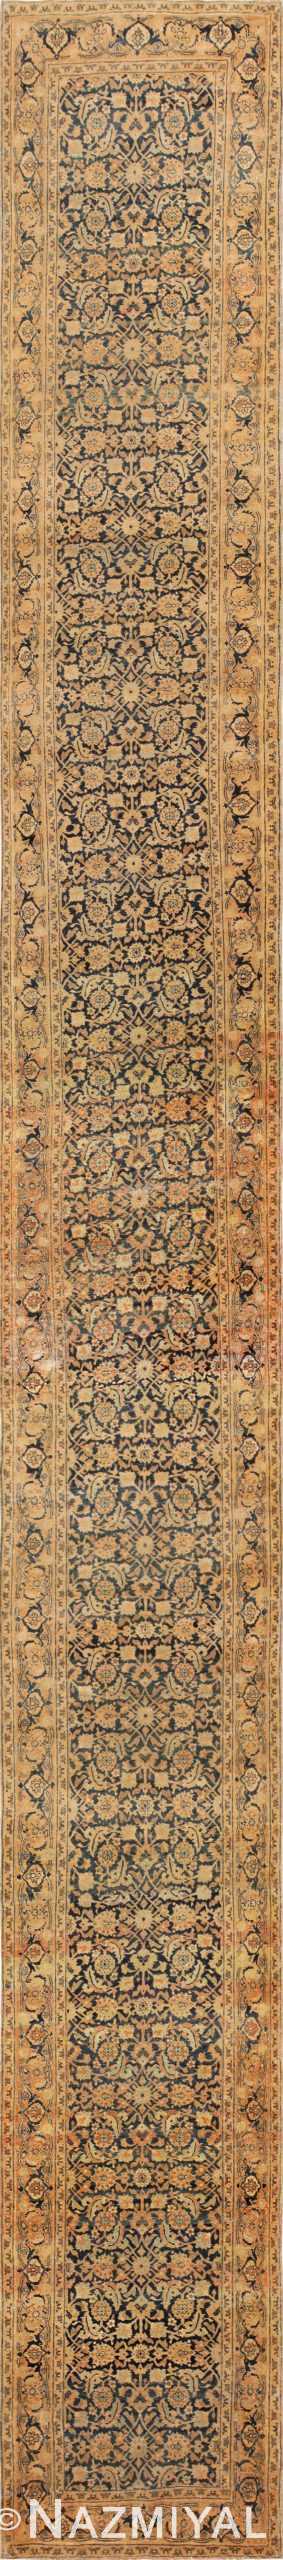 Antique Persian Tabriz Runner Rug 47038 Nazmiyal Antique Rugs